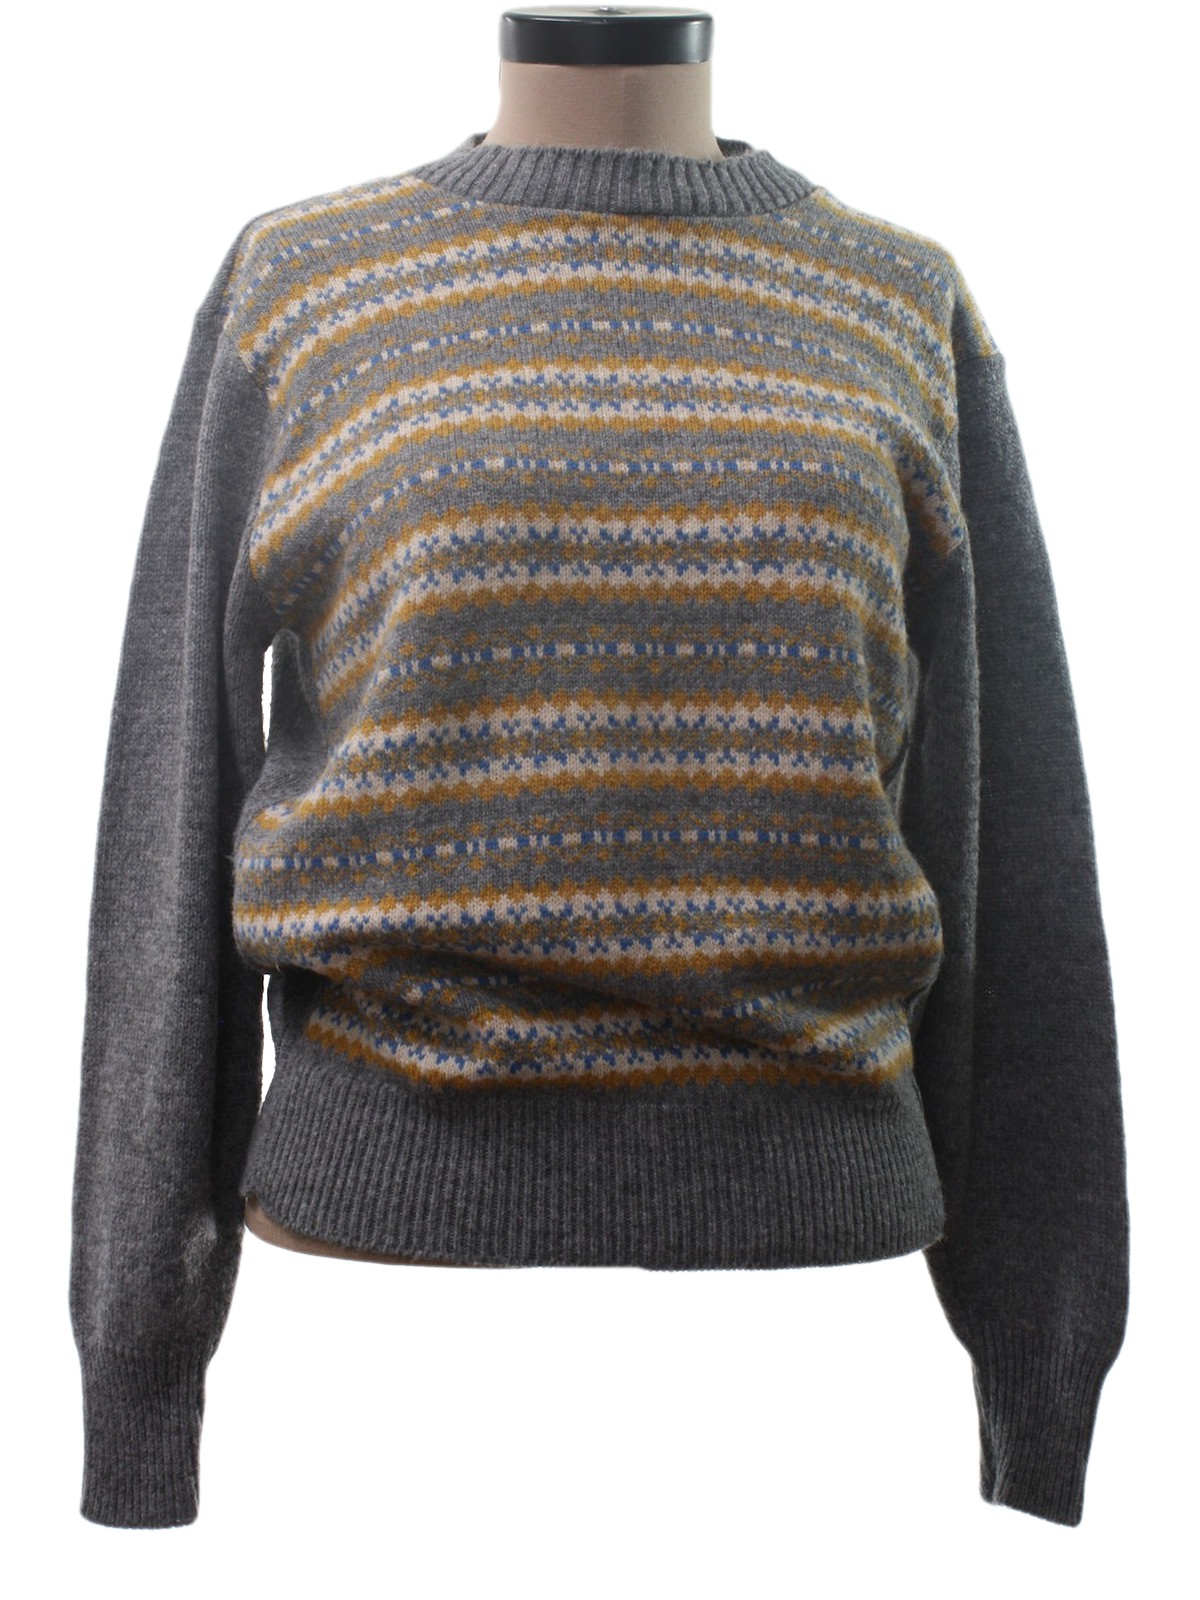 70s Vintage Sportswear Sweater: Late 70s -Sportswear- Womens heathered grey background with ...